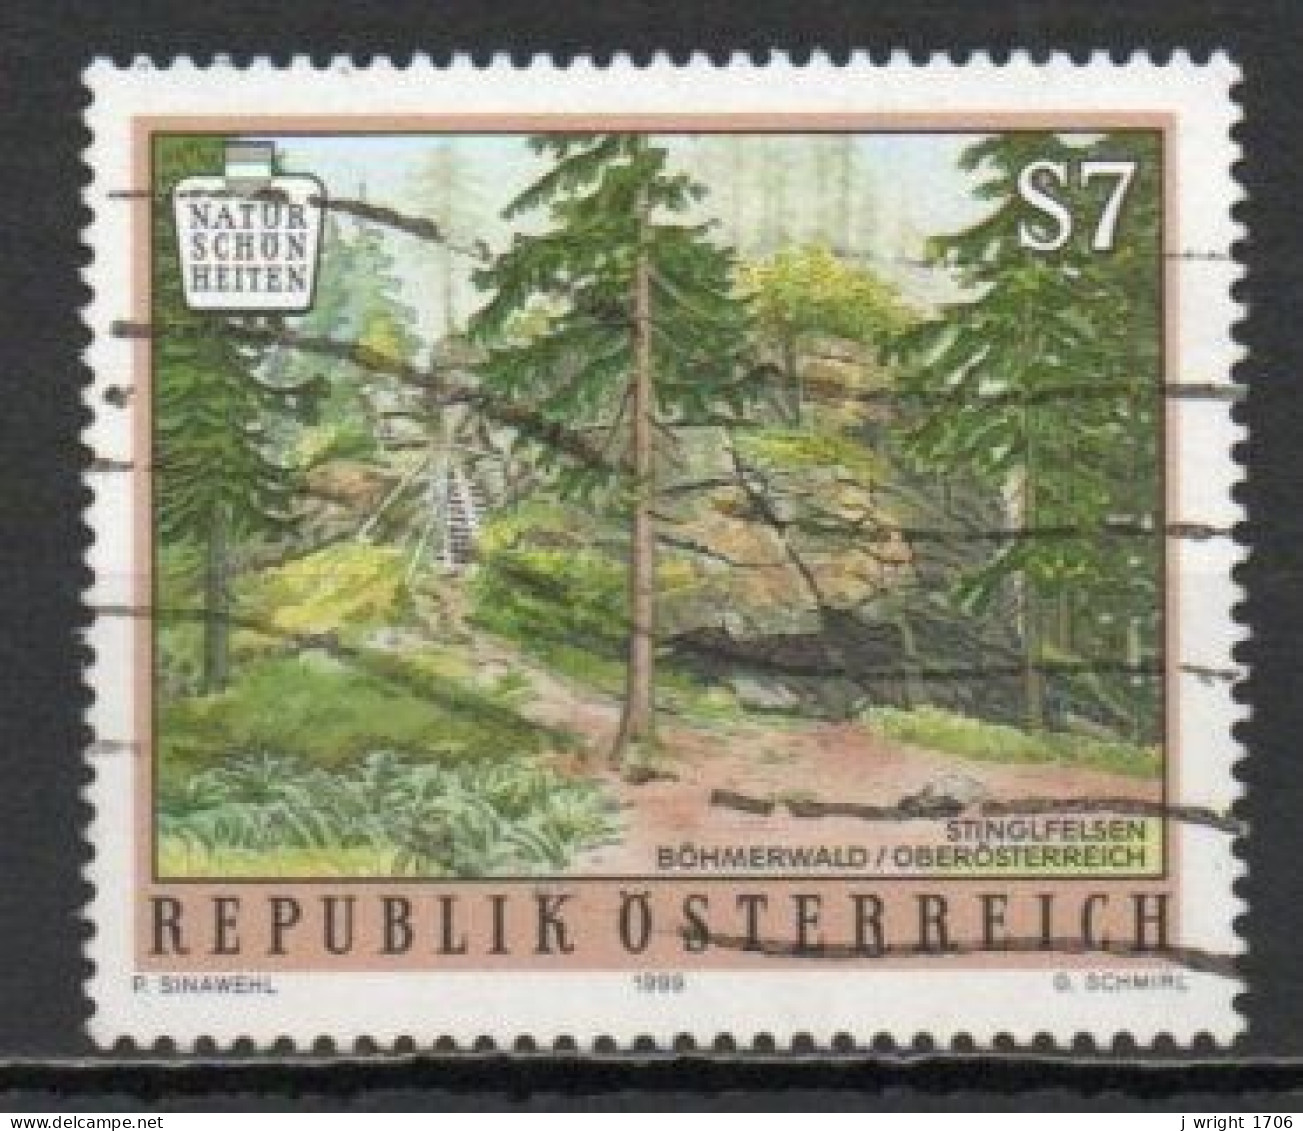 Austria, 1999, Austrian Natural Beauty/Stinglfelsen, 7s, USED - Gebruikt